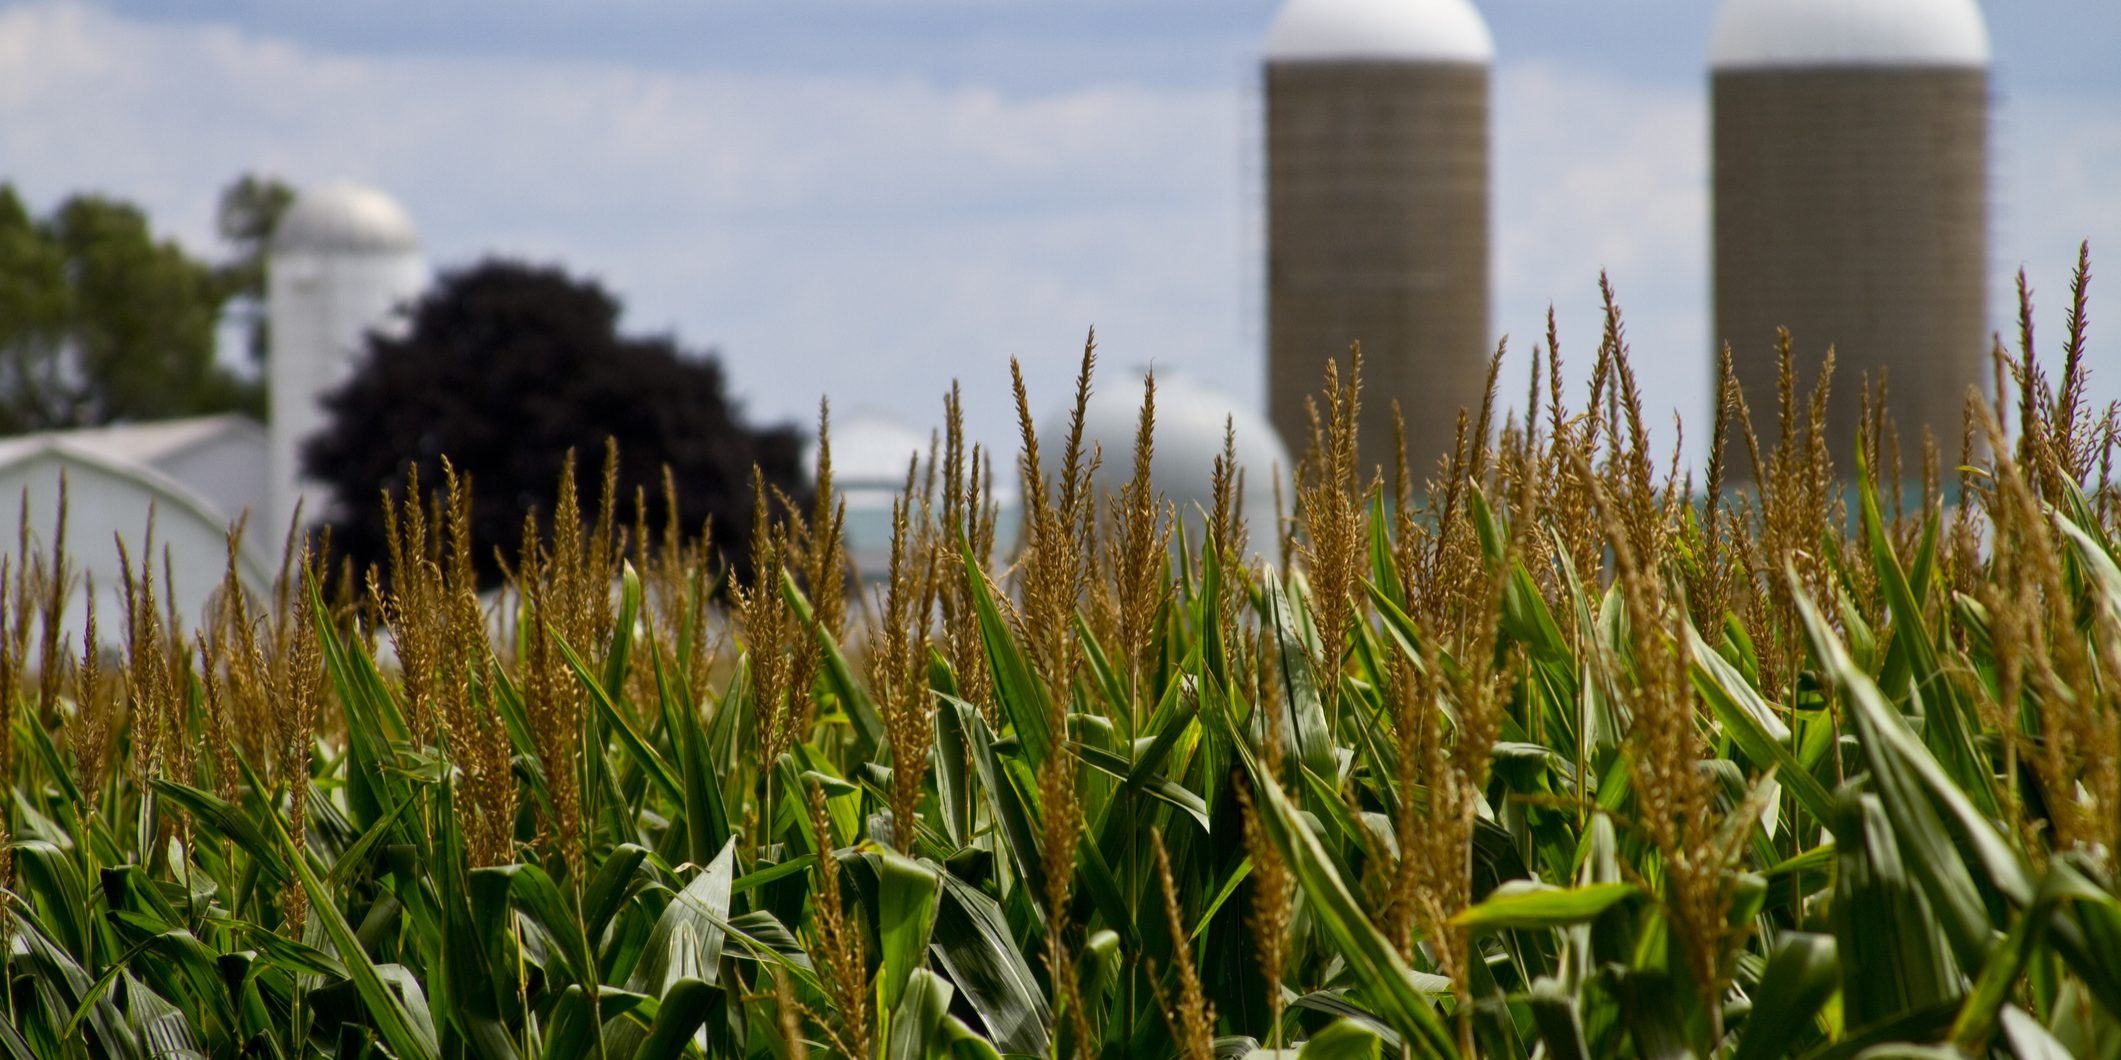 Grain silos at a family farm rise above a late summer cornfield in southern Michigan.